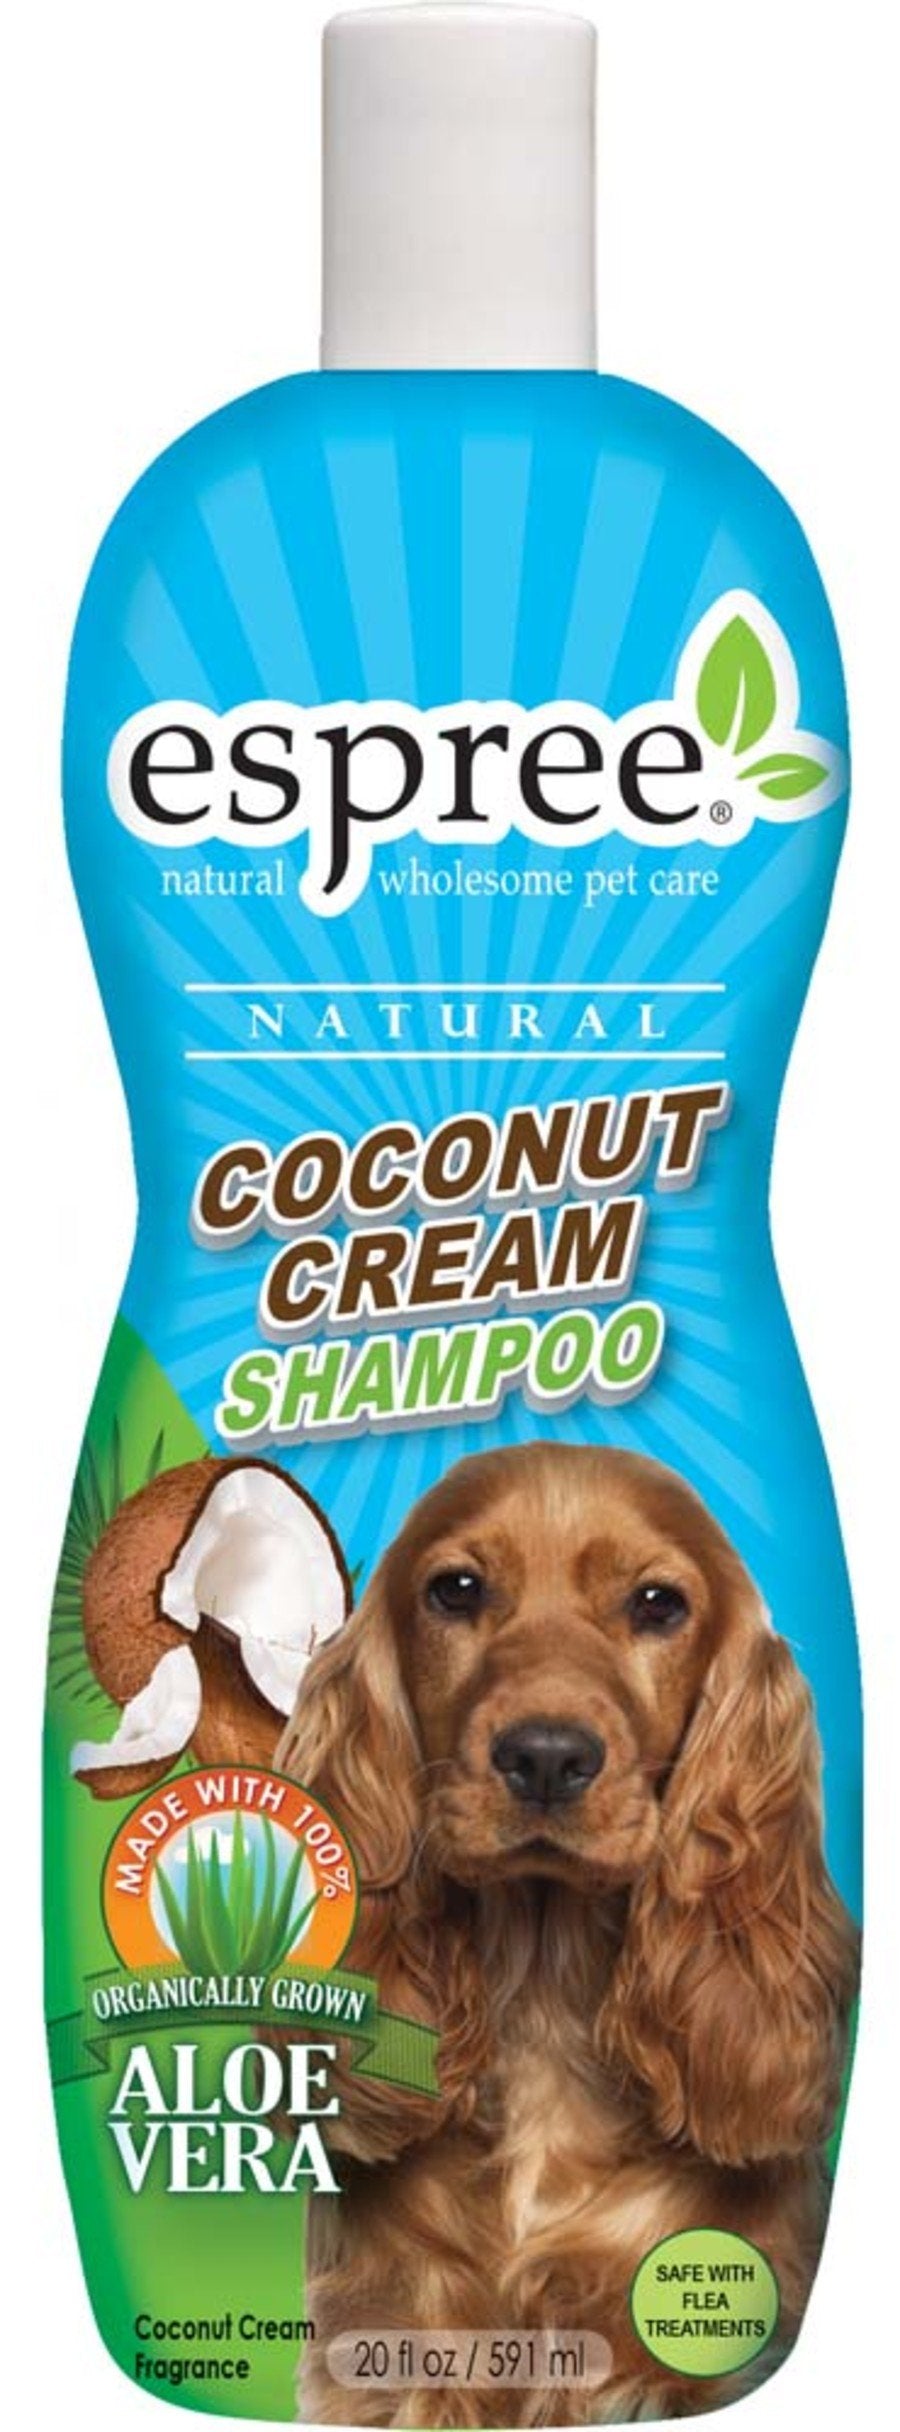 Espree Natural Coconut Cream Dog Shampoo 20 fl oz, Espree